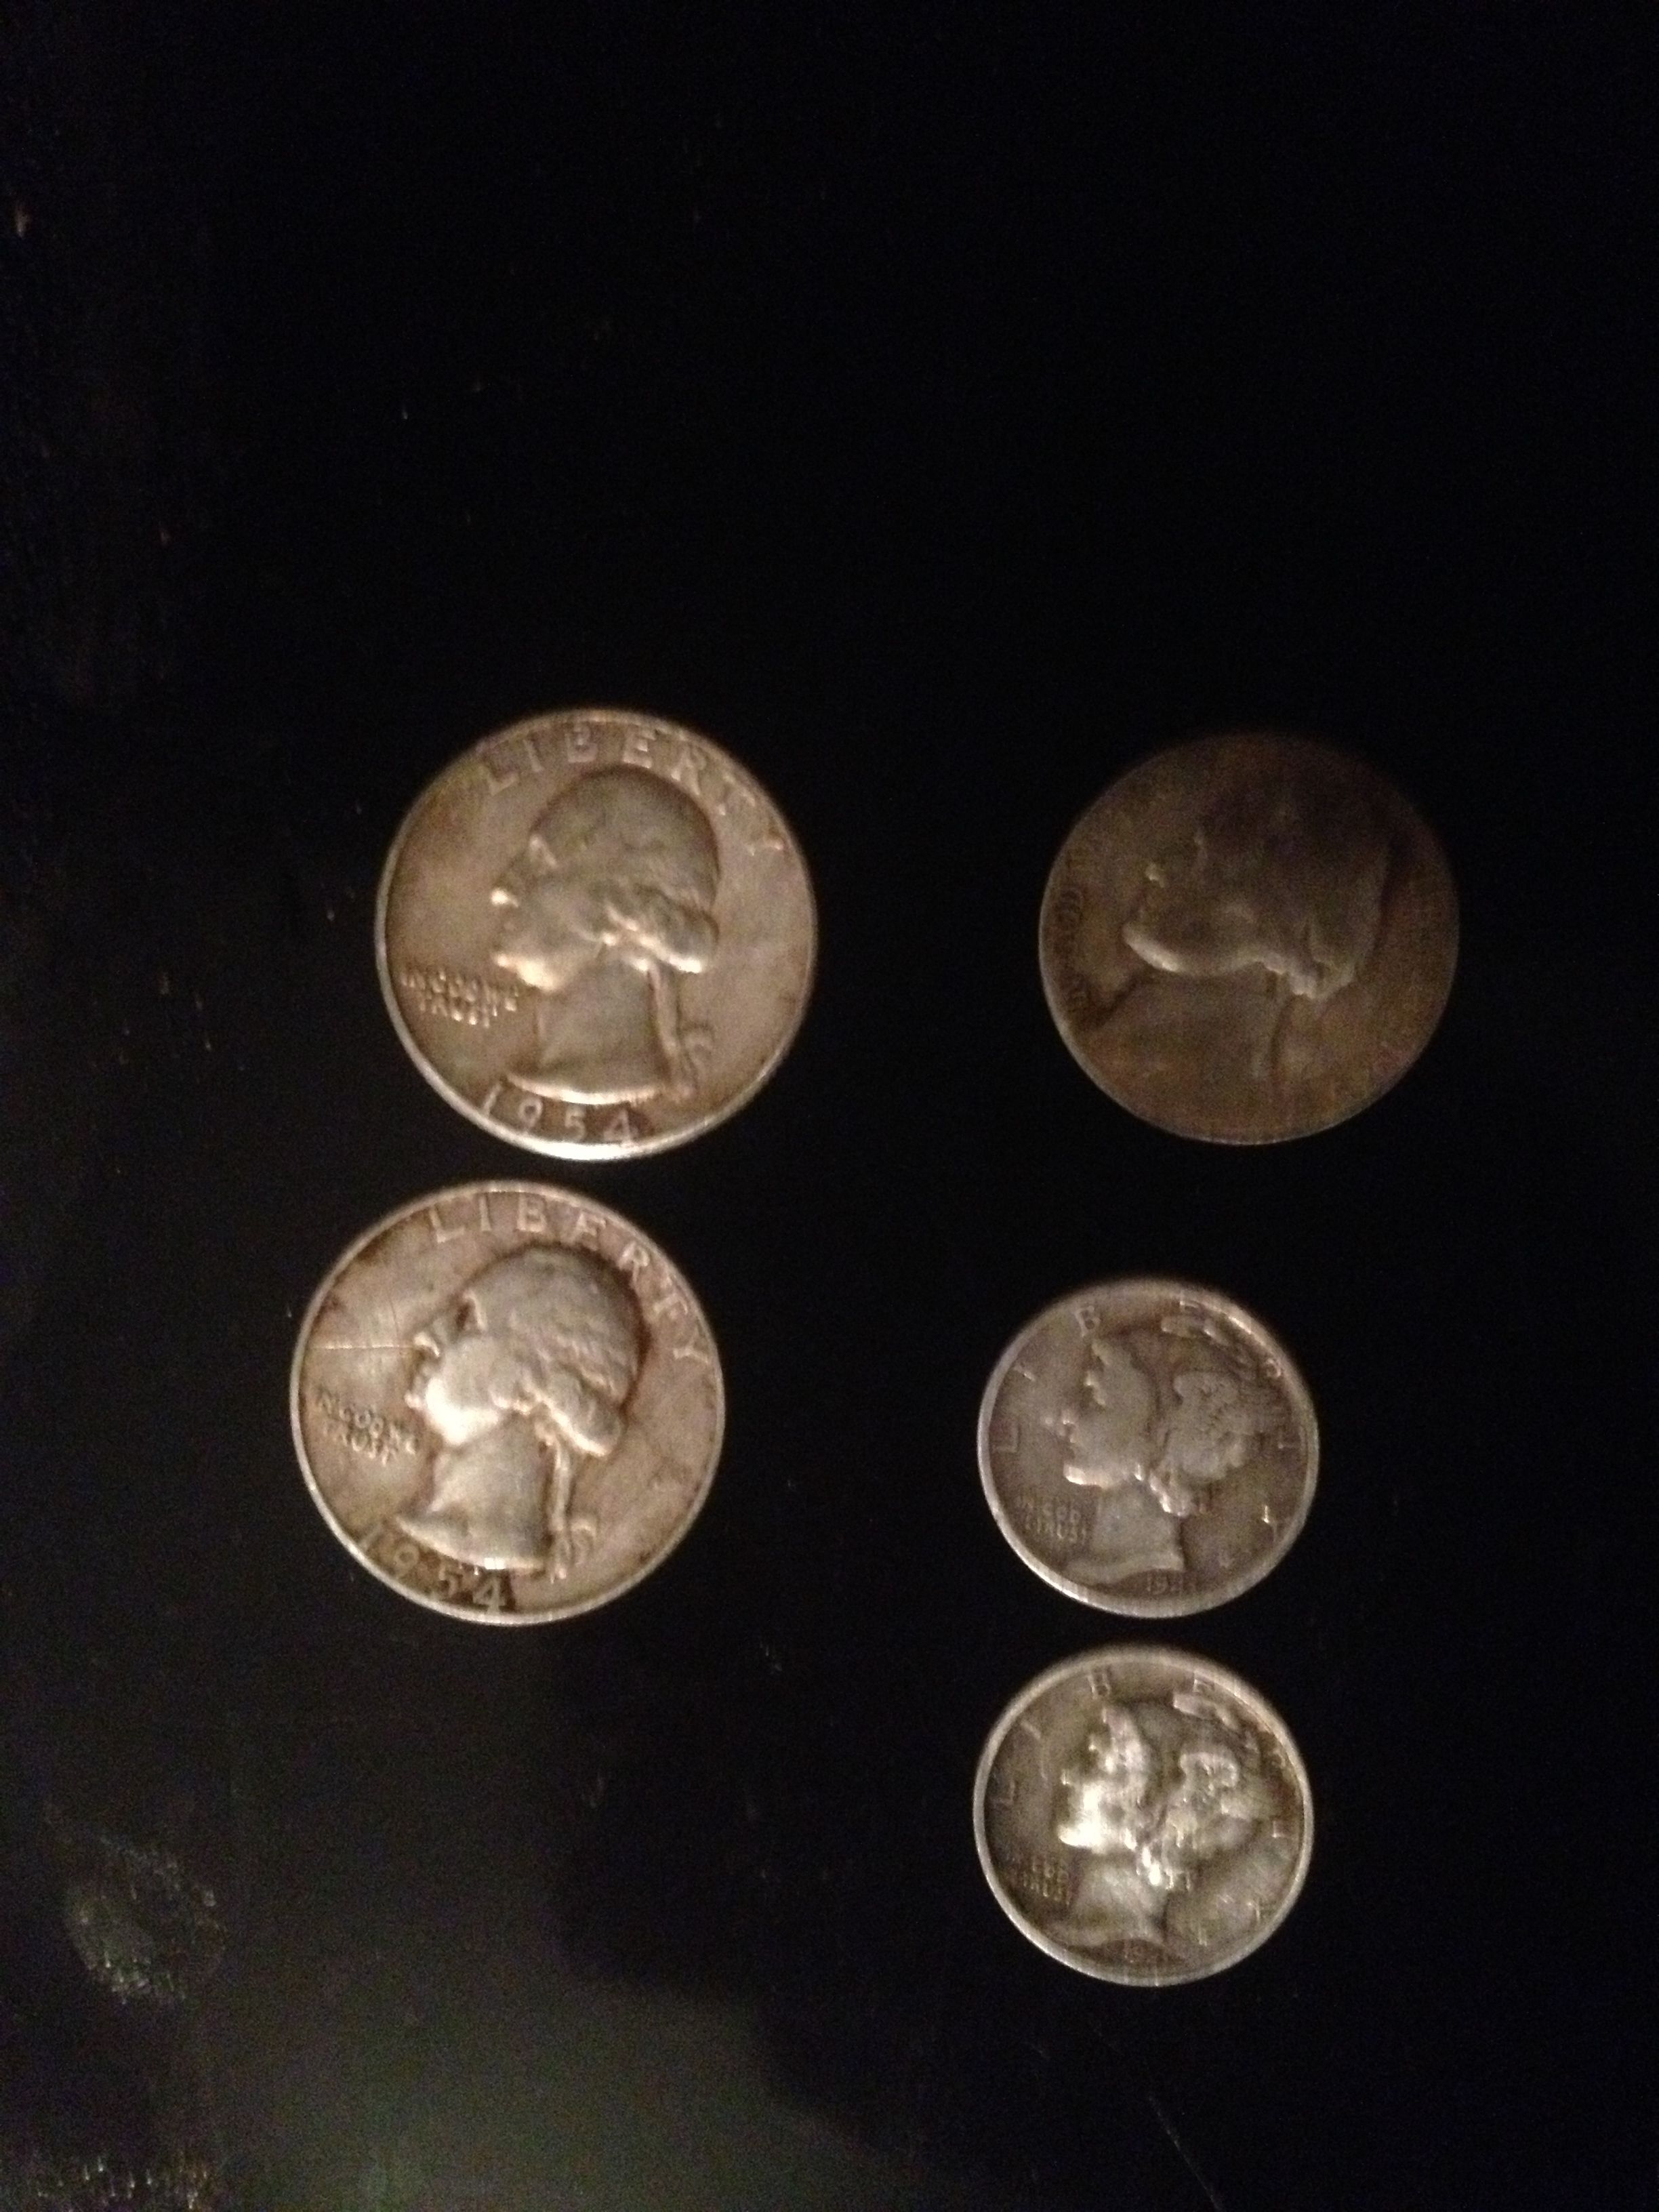 5 silvers in 1 day
1941 & 1943 merc
2 1954 quarters
1 1965 nickel